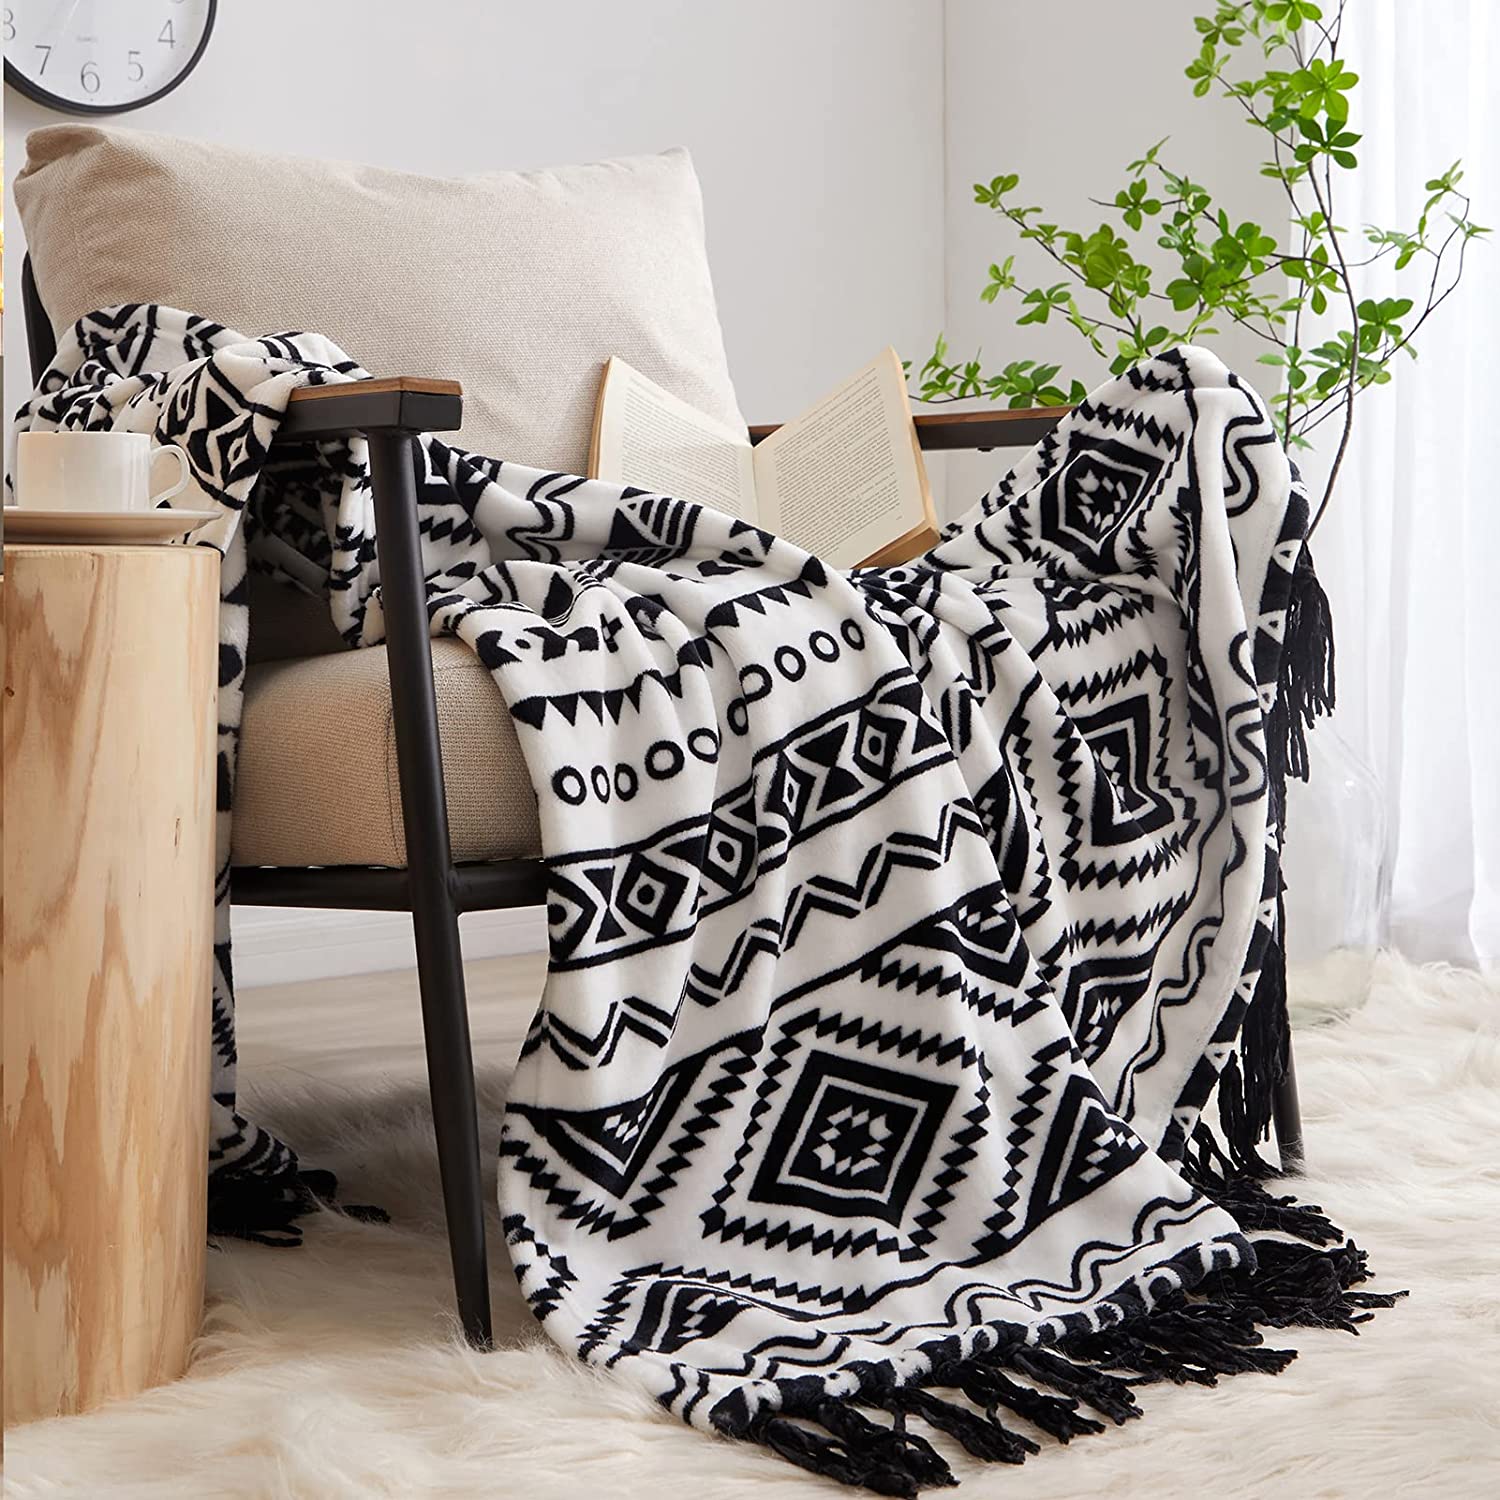 CASAAGUSTO Boho Throw Blanket - Black and White Decorative